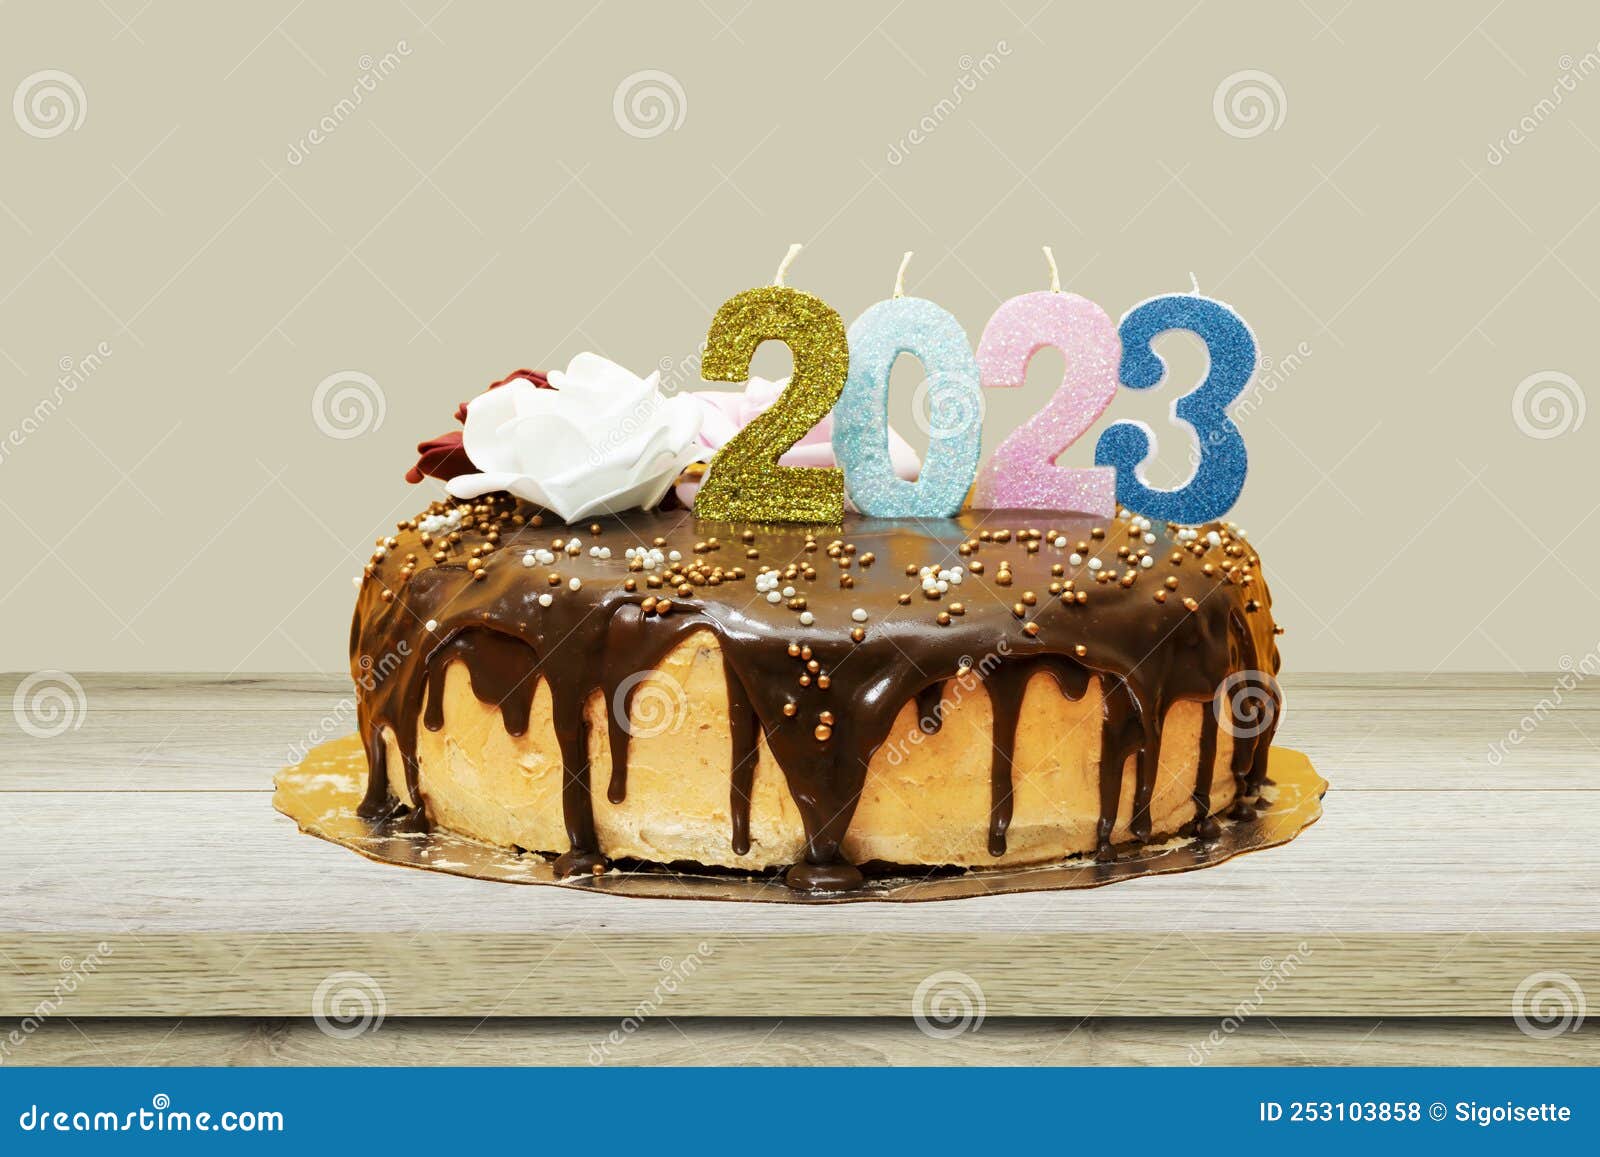 2023 New Year Birthday Cake Chocolate and Cream Decorated with ...